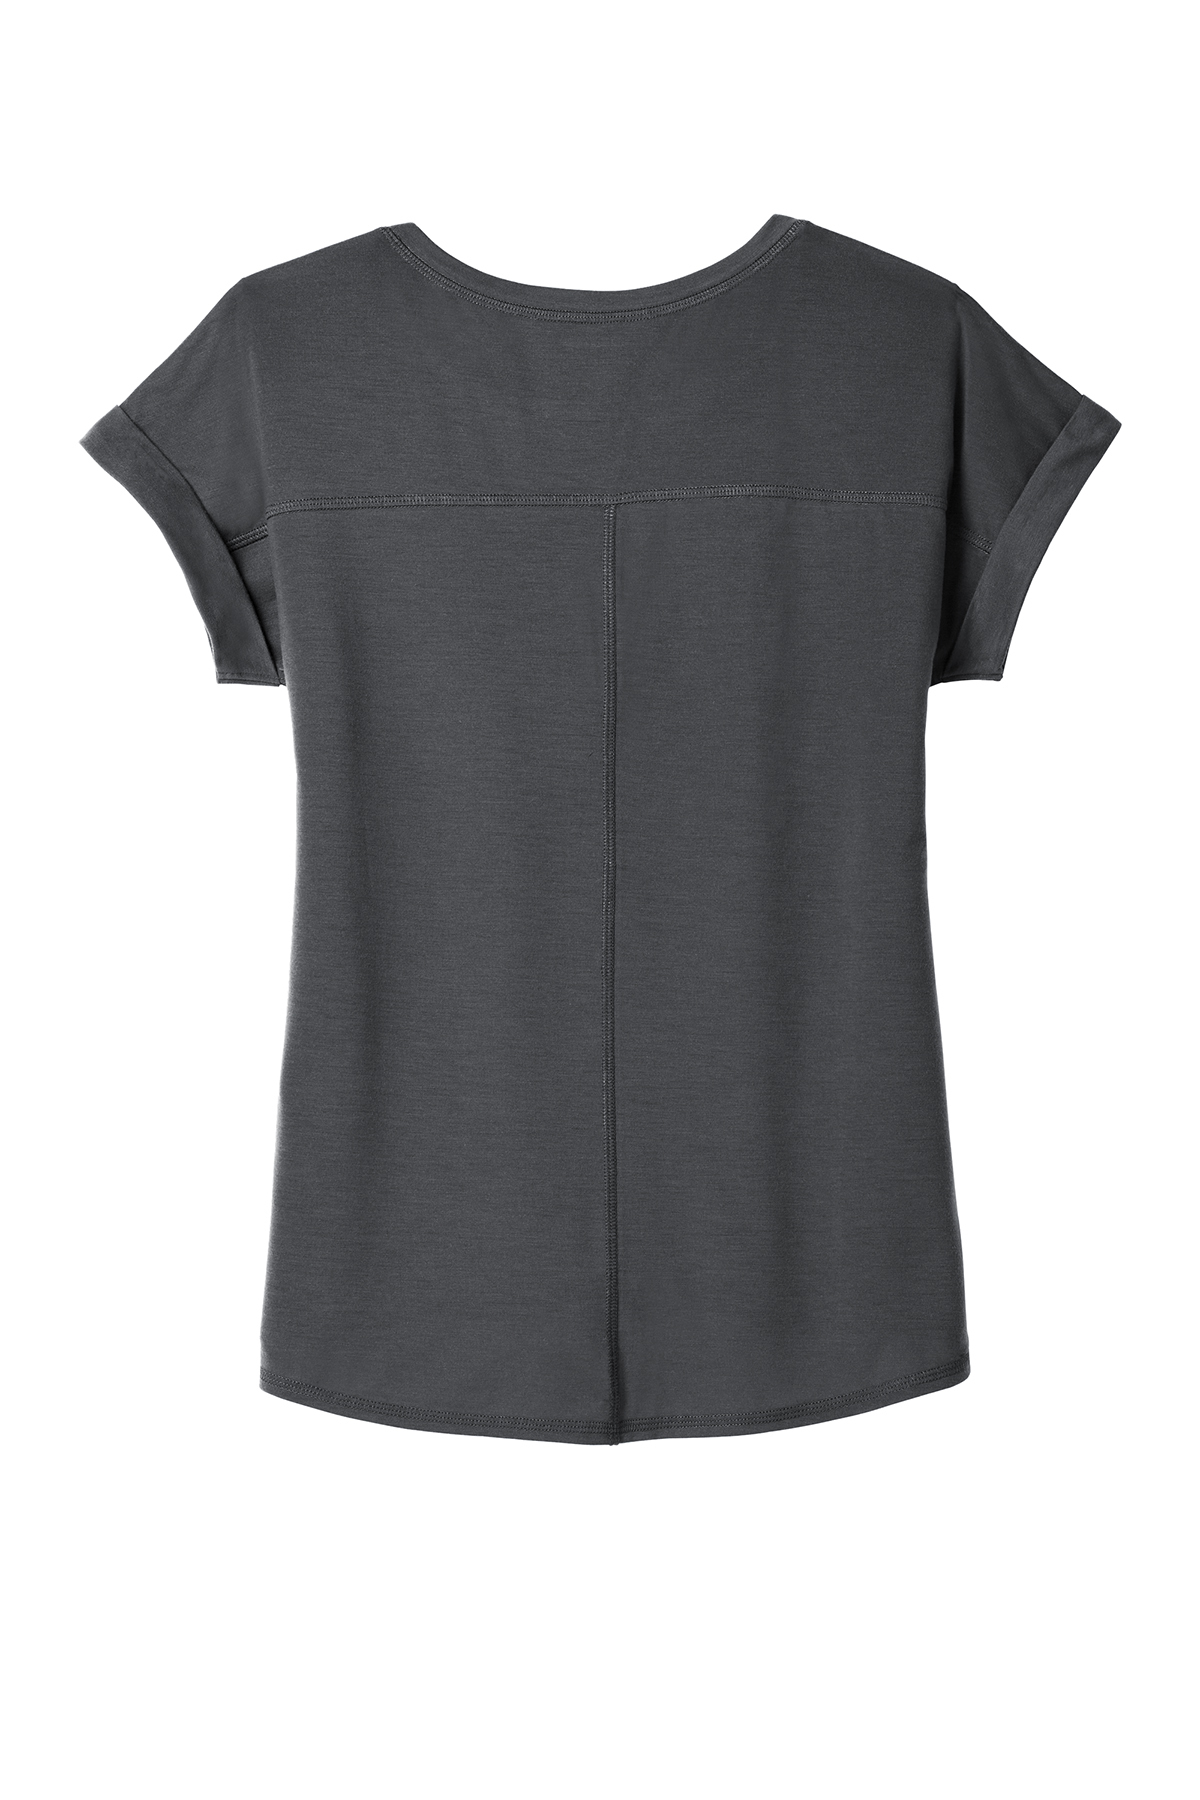 OGIO Ladies Luuma Cuffed Short Sleeve | Product | SanMar